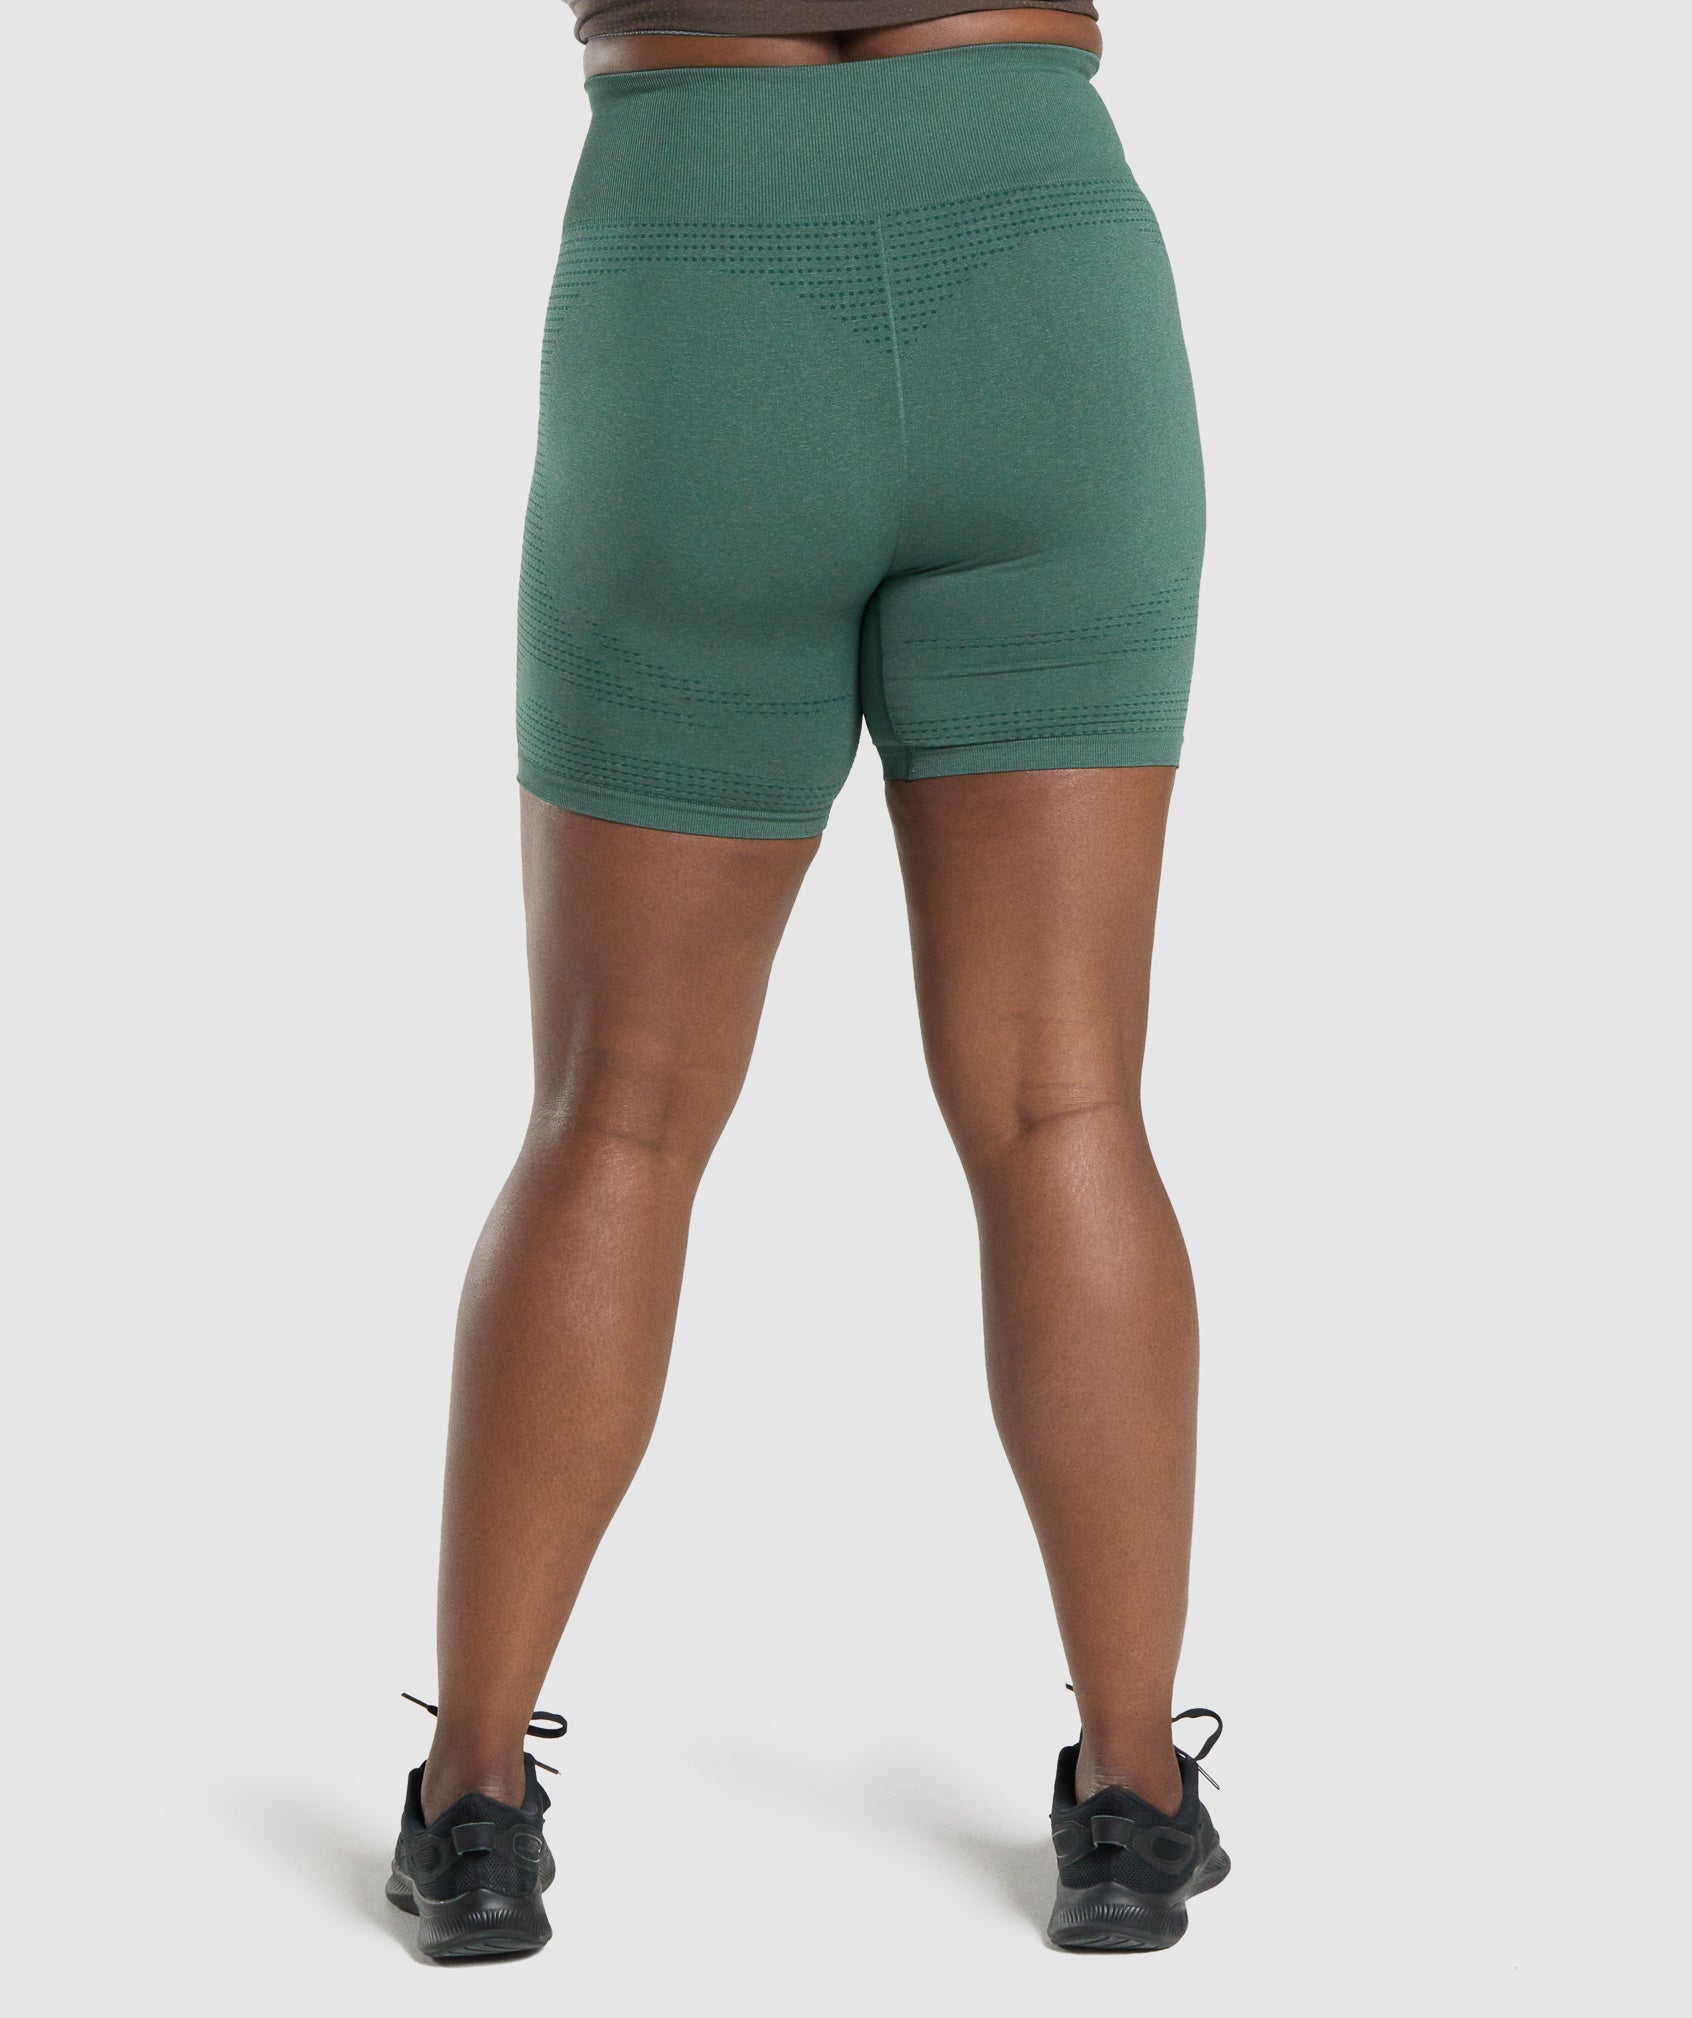 Vital Seamless 2.0 Shorts in Dark Green Marl - view 1